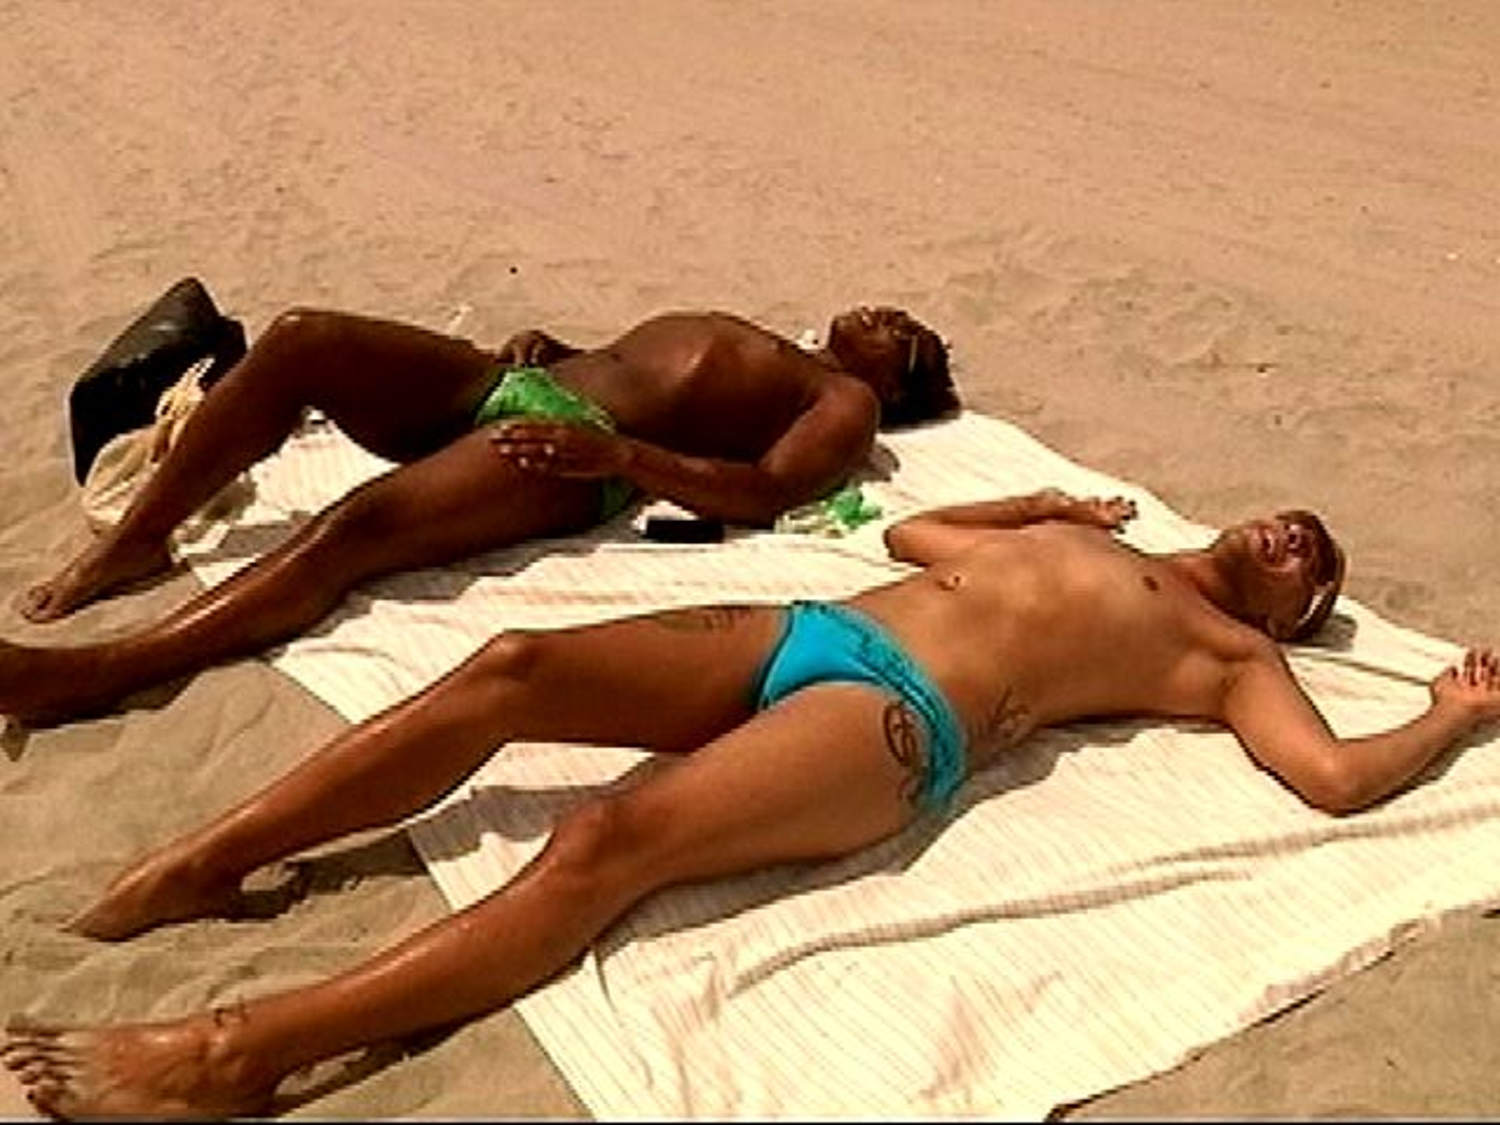 Nude Beach Fun Videos - No fence leaves nude beachgoers exposed